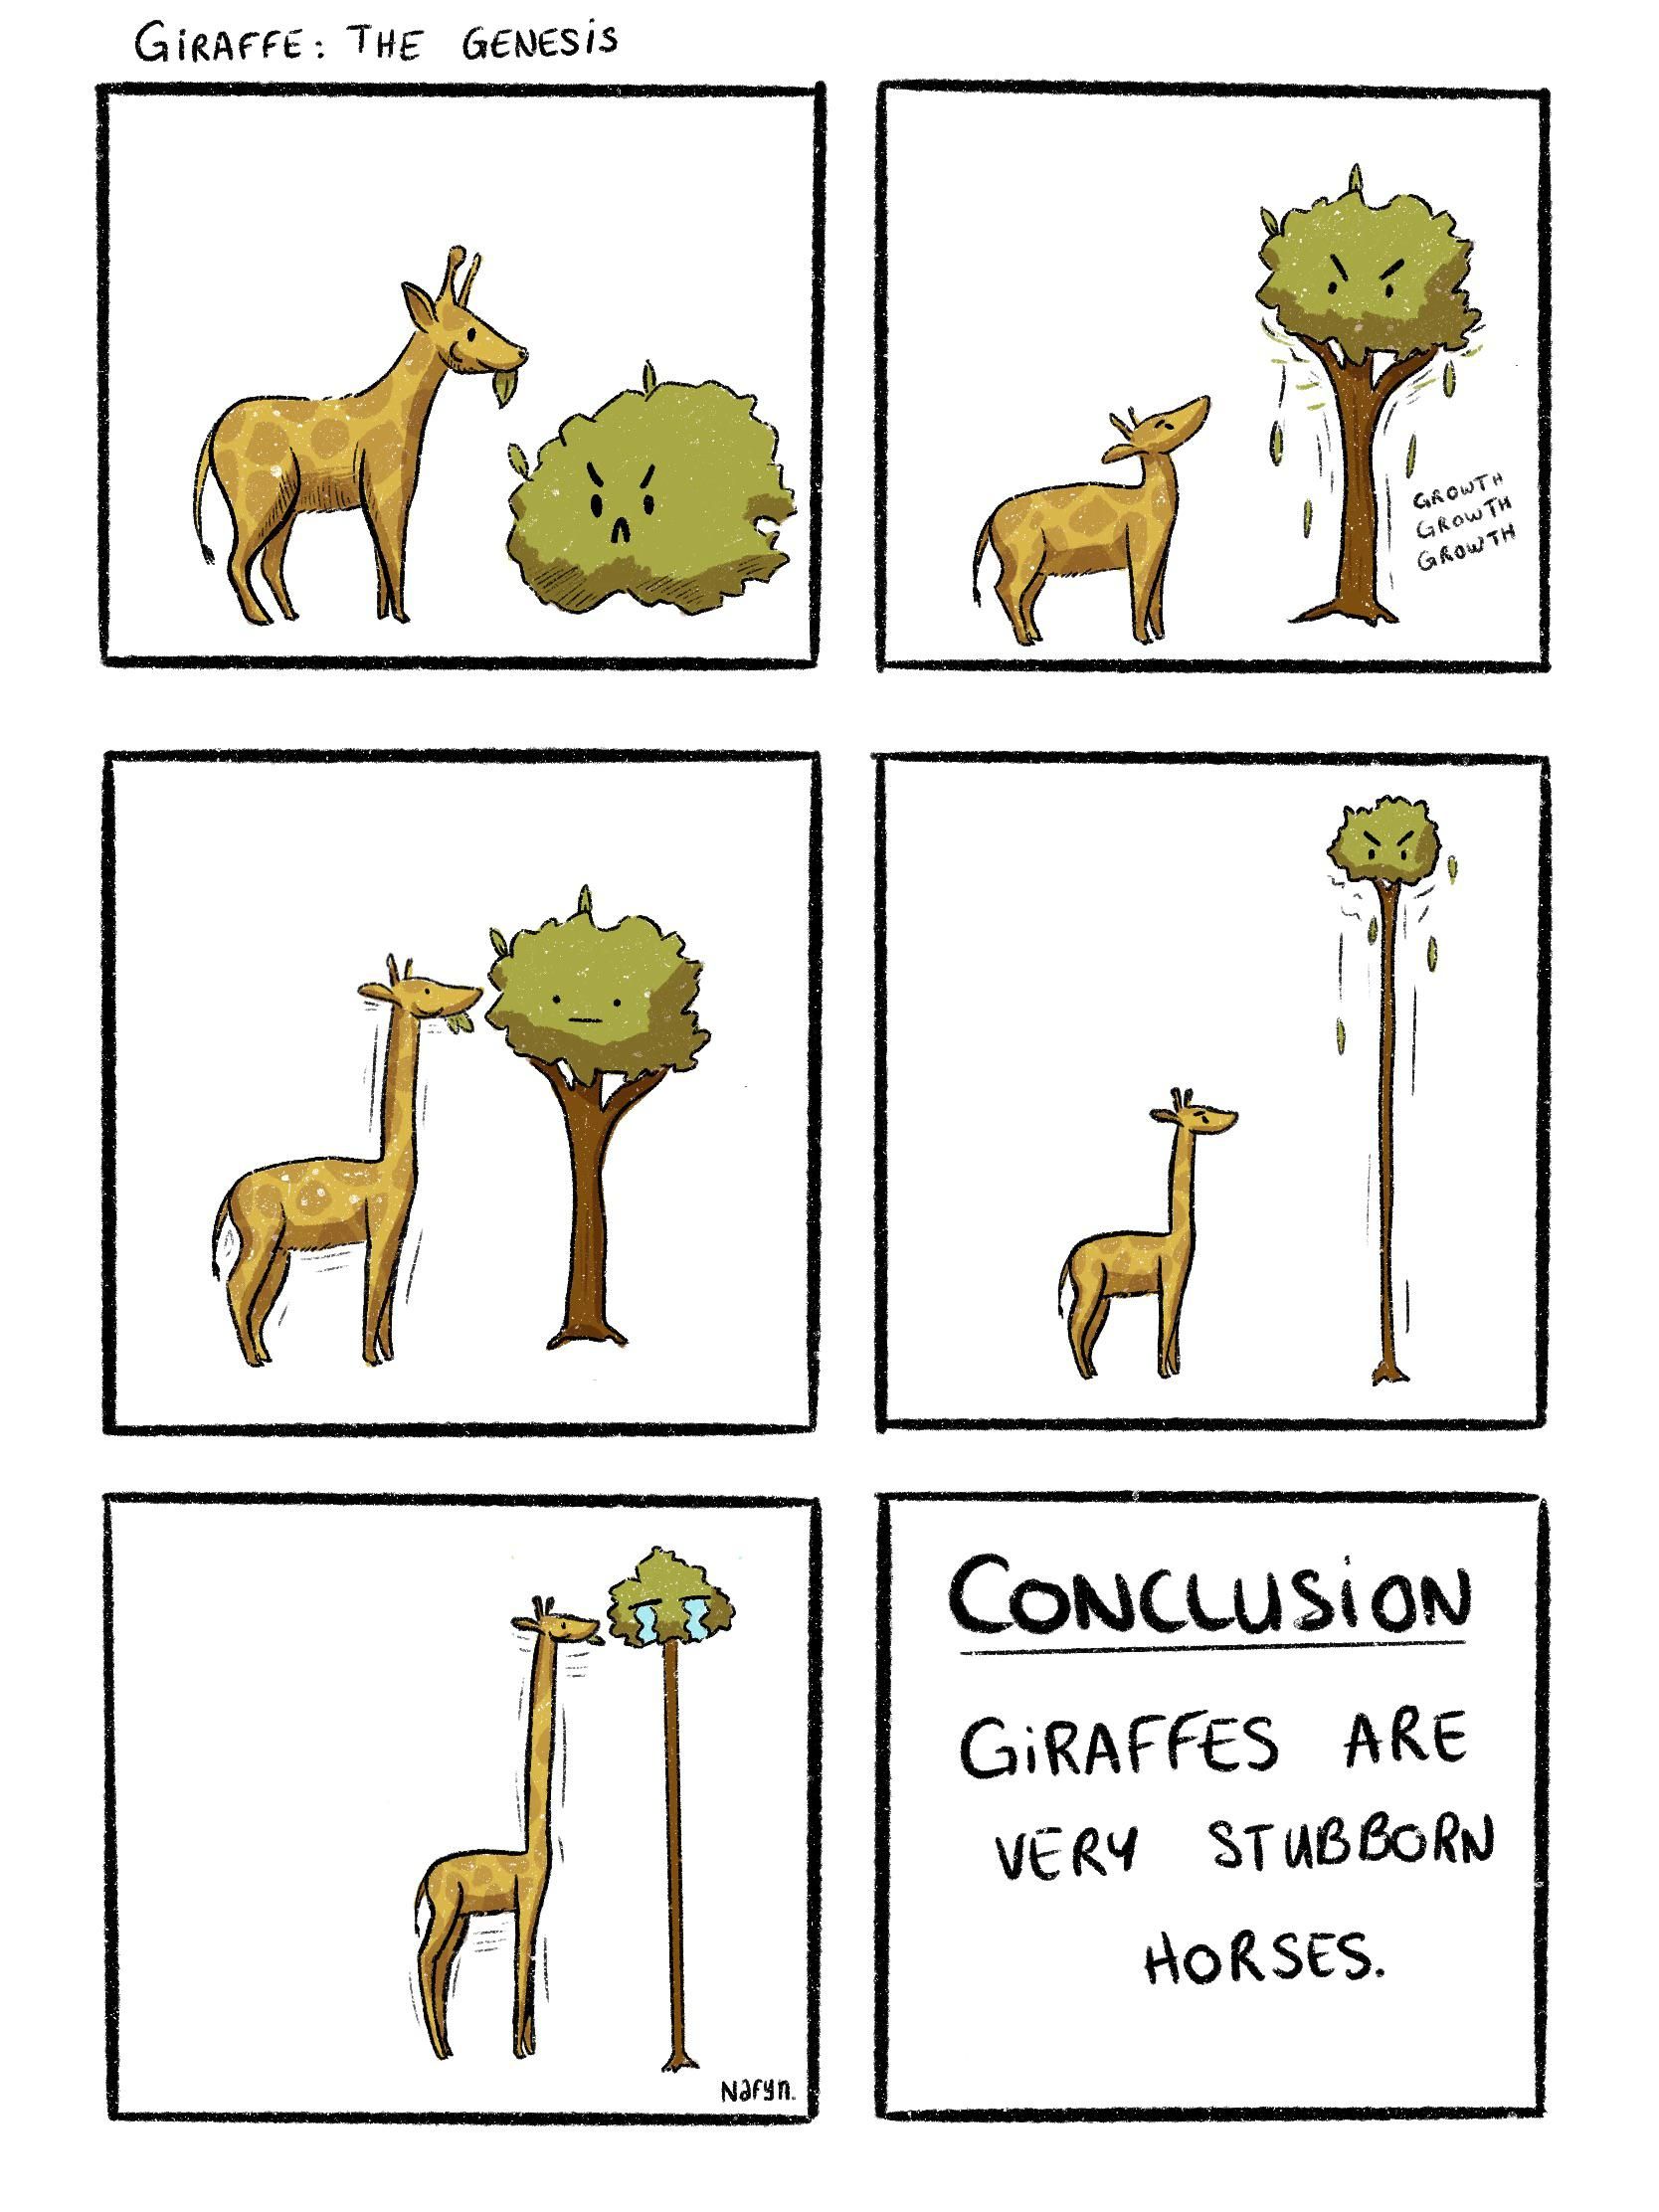 Giraffes: the genesis